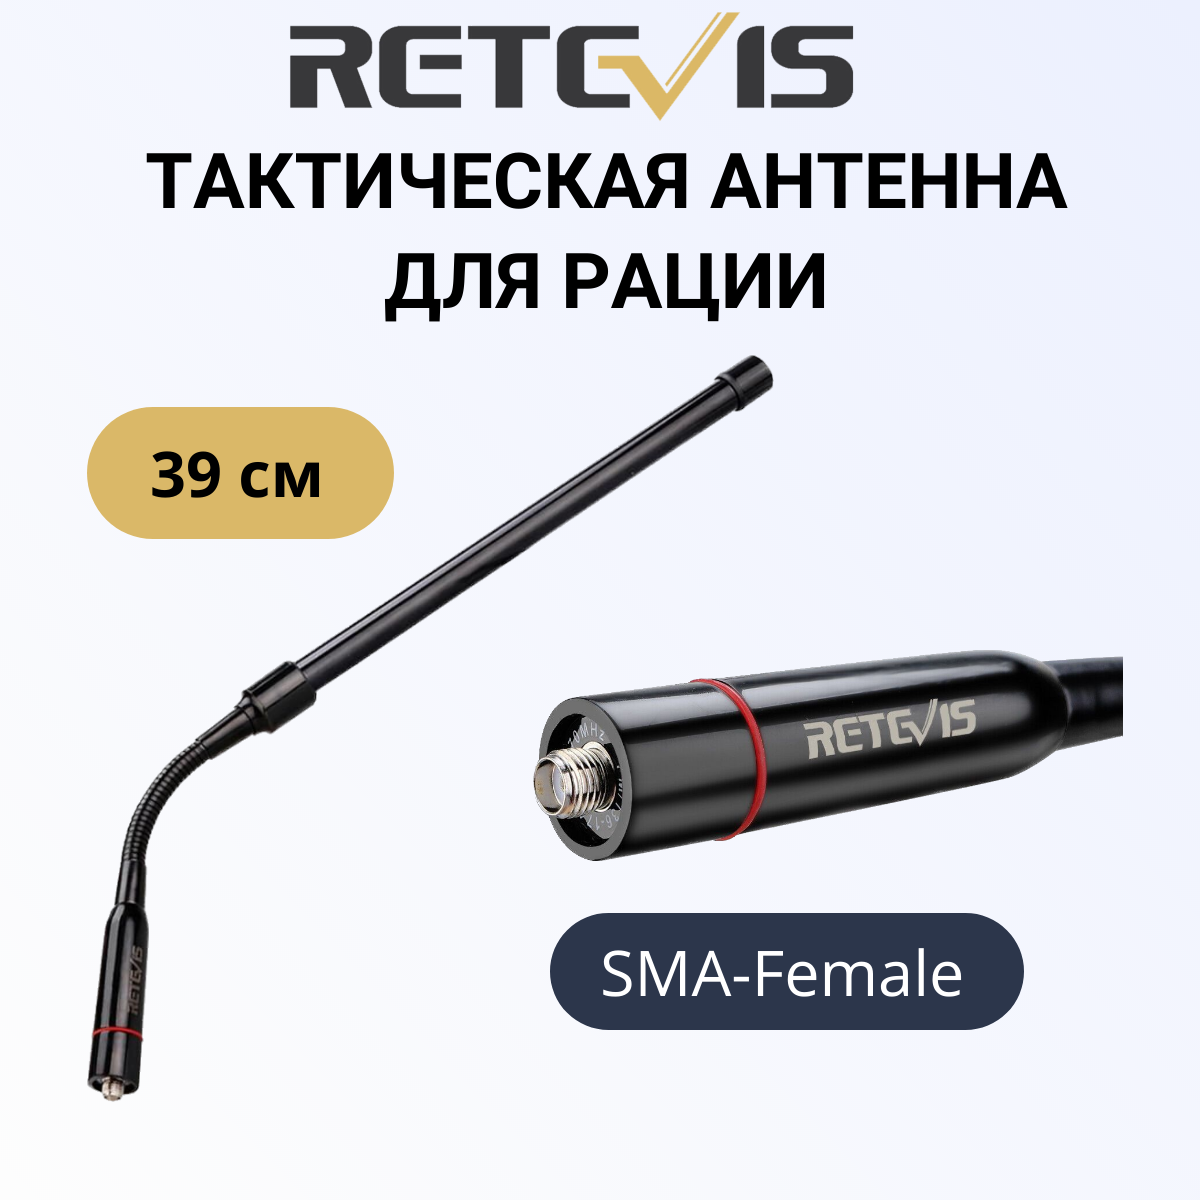 Тактическая антенна Retevis HA-03 (SMA - Female) 39cm двухдиапазонная (VHF / UHF).